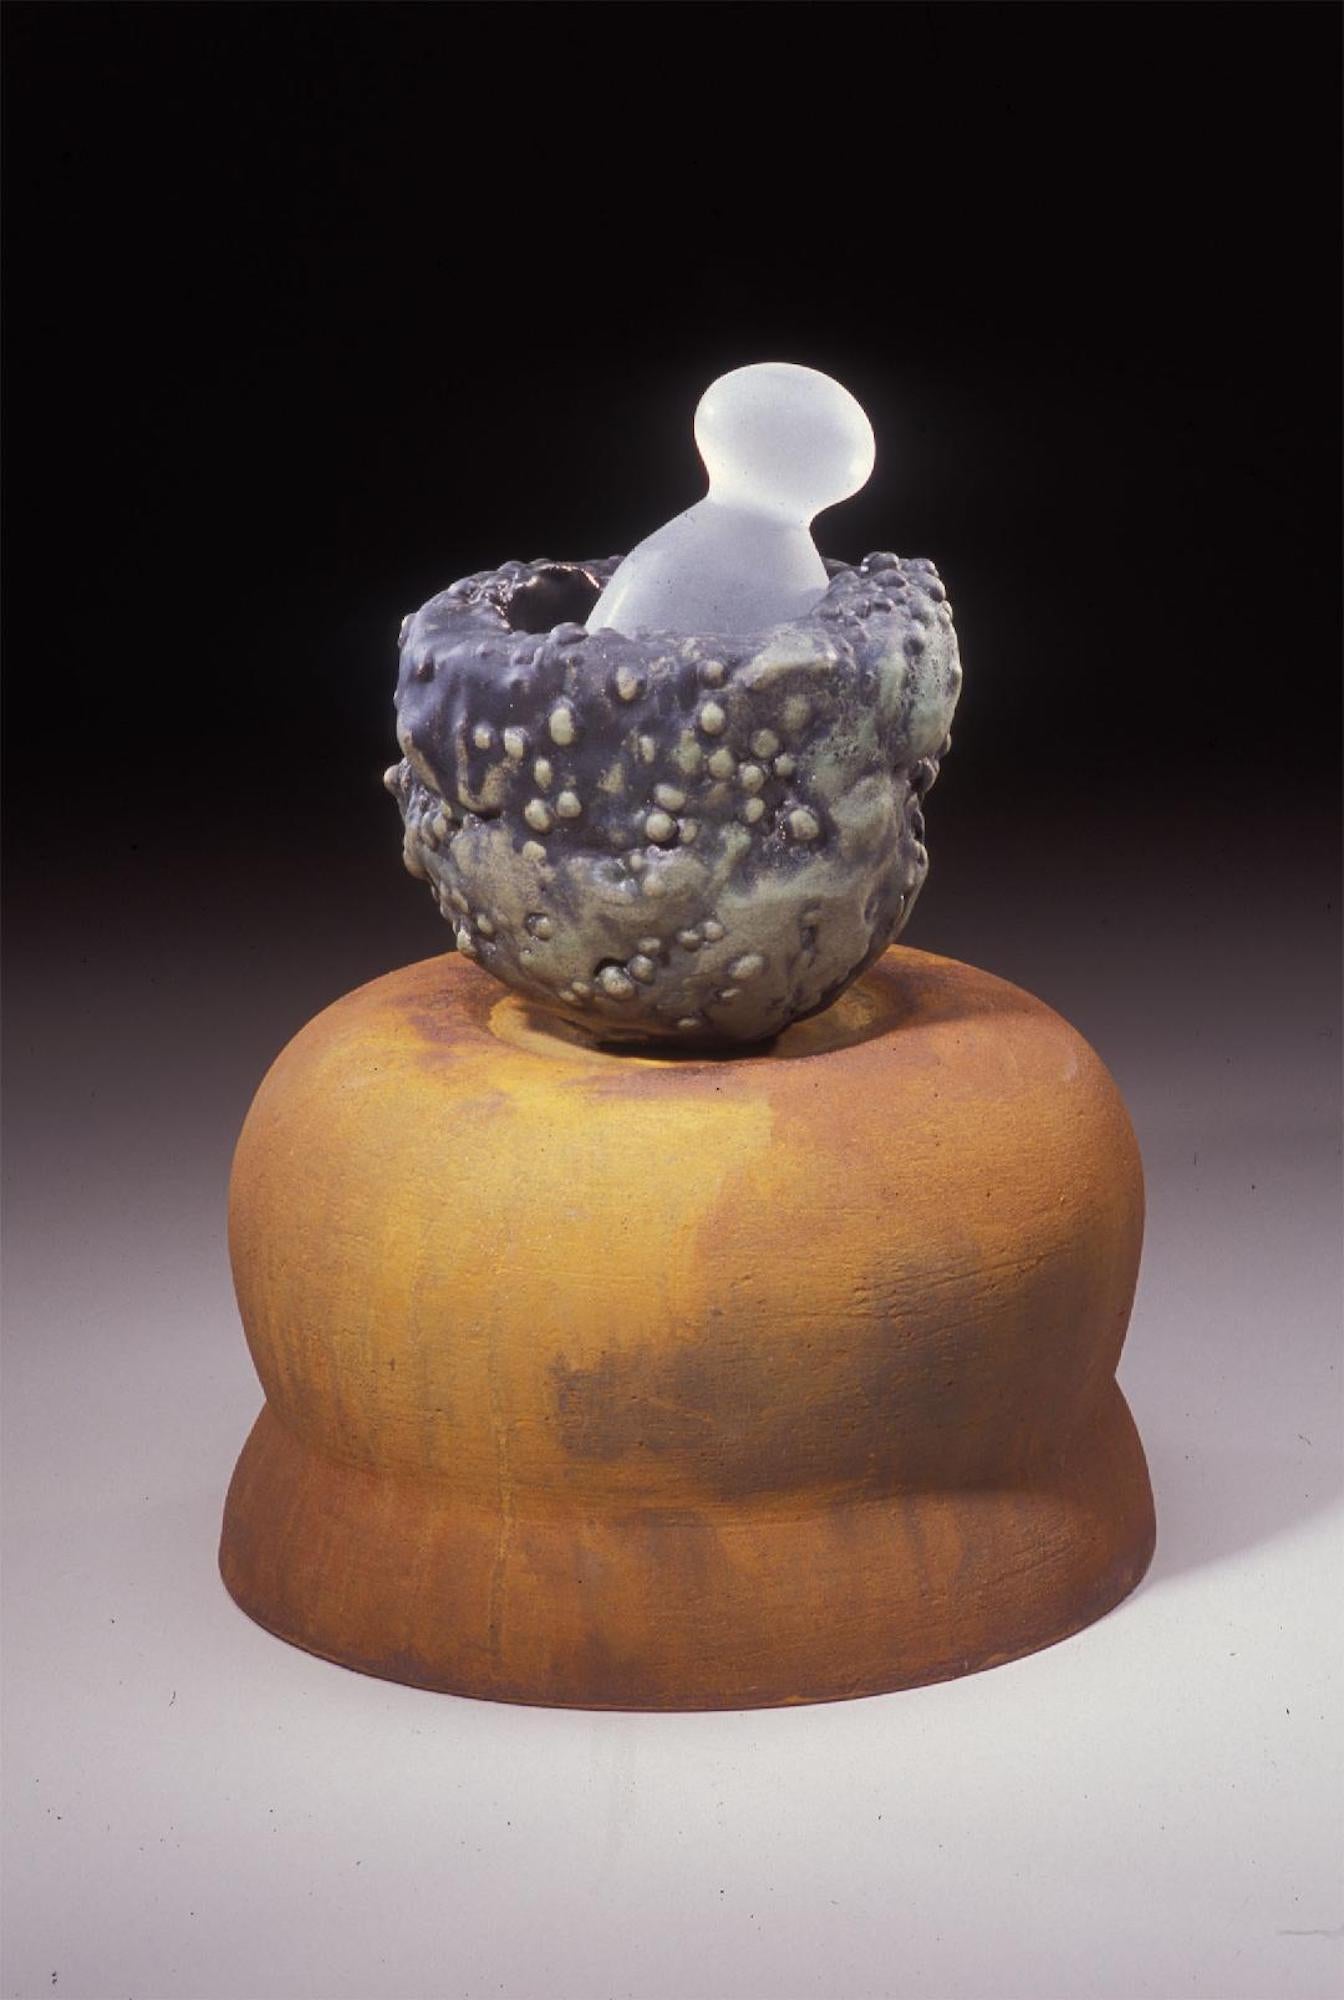 Richard Hirsch Ceramic Mortar and Glass Pestle Sculpture, 2007 For Sale 1